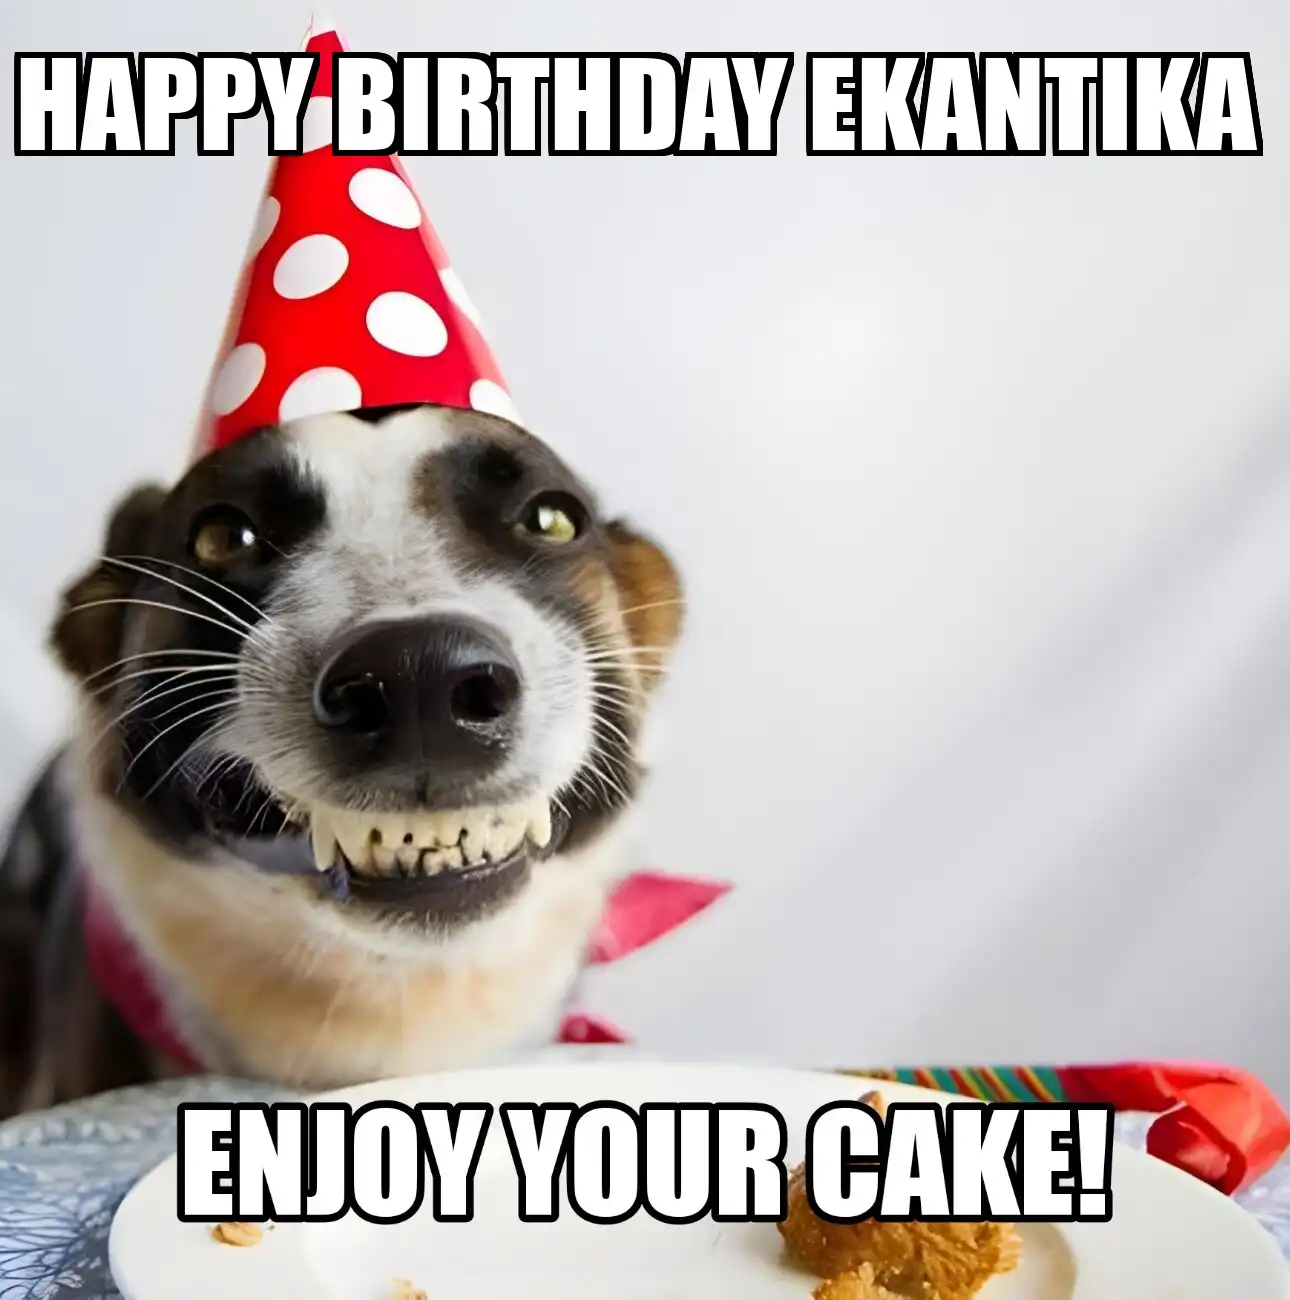 Happy Birthday Ekantika Enjoy Your Cake Dog Meme